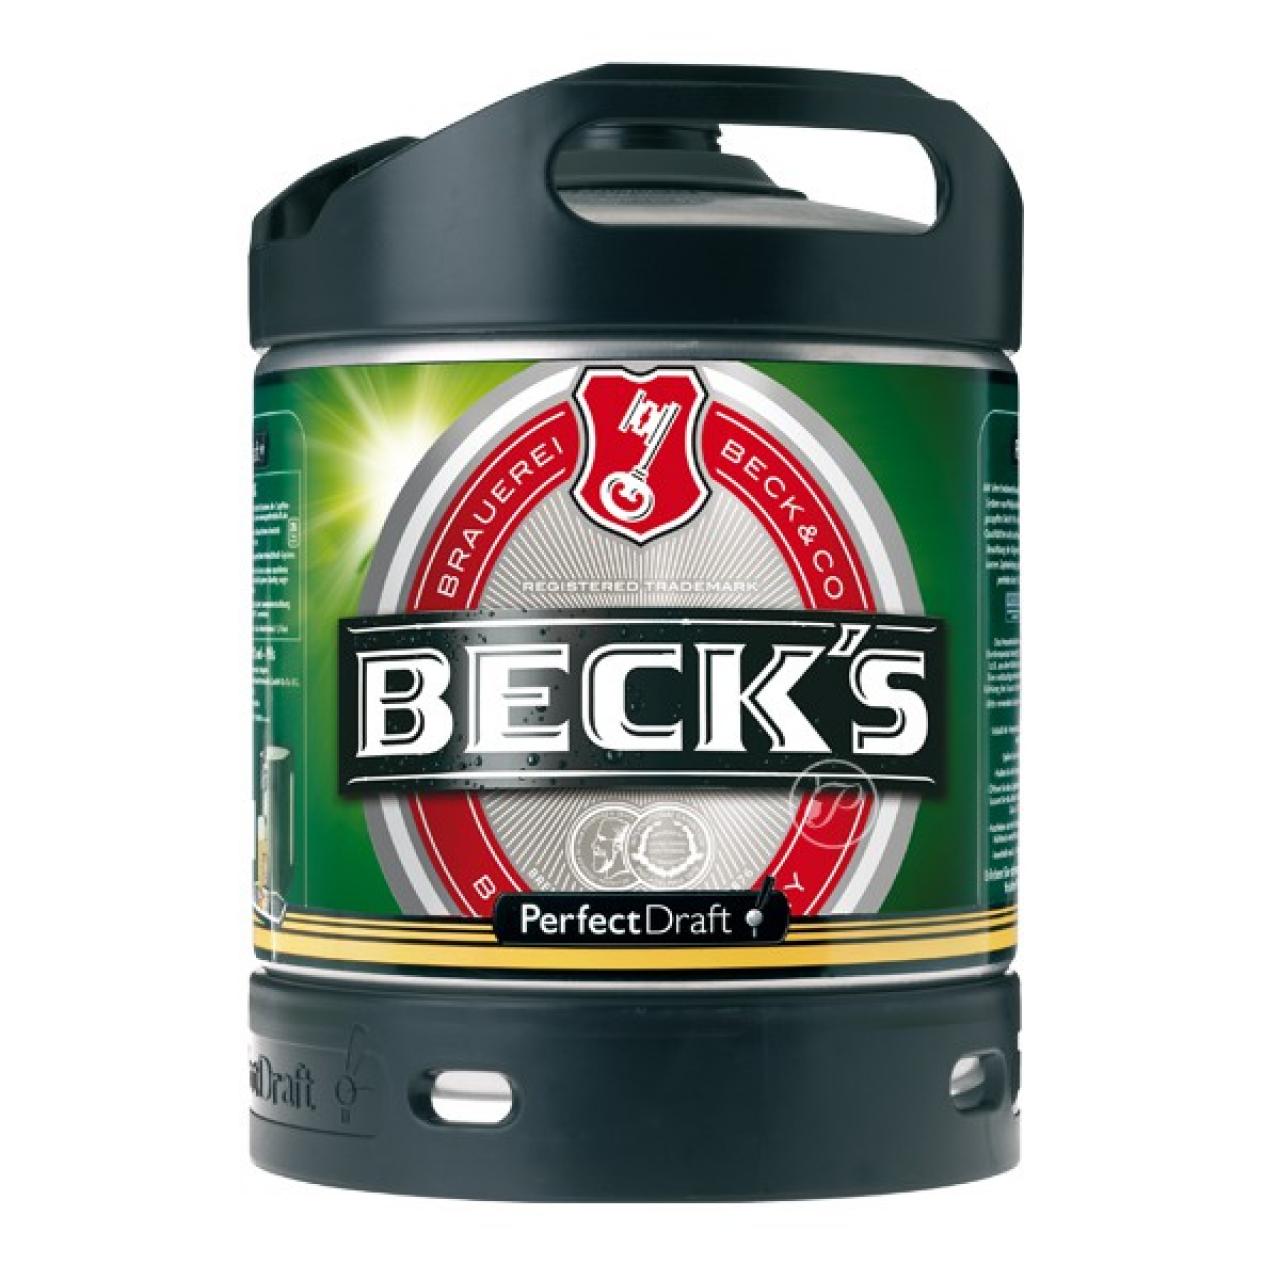 BECK'S VERTE PERFECTDRAFT 6L